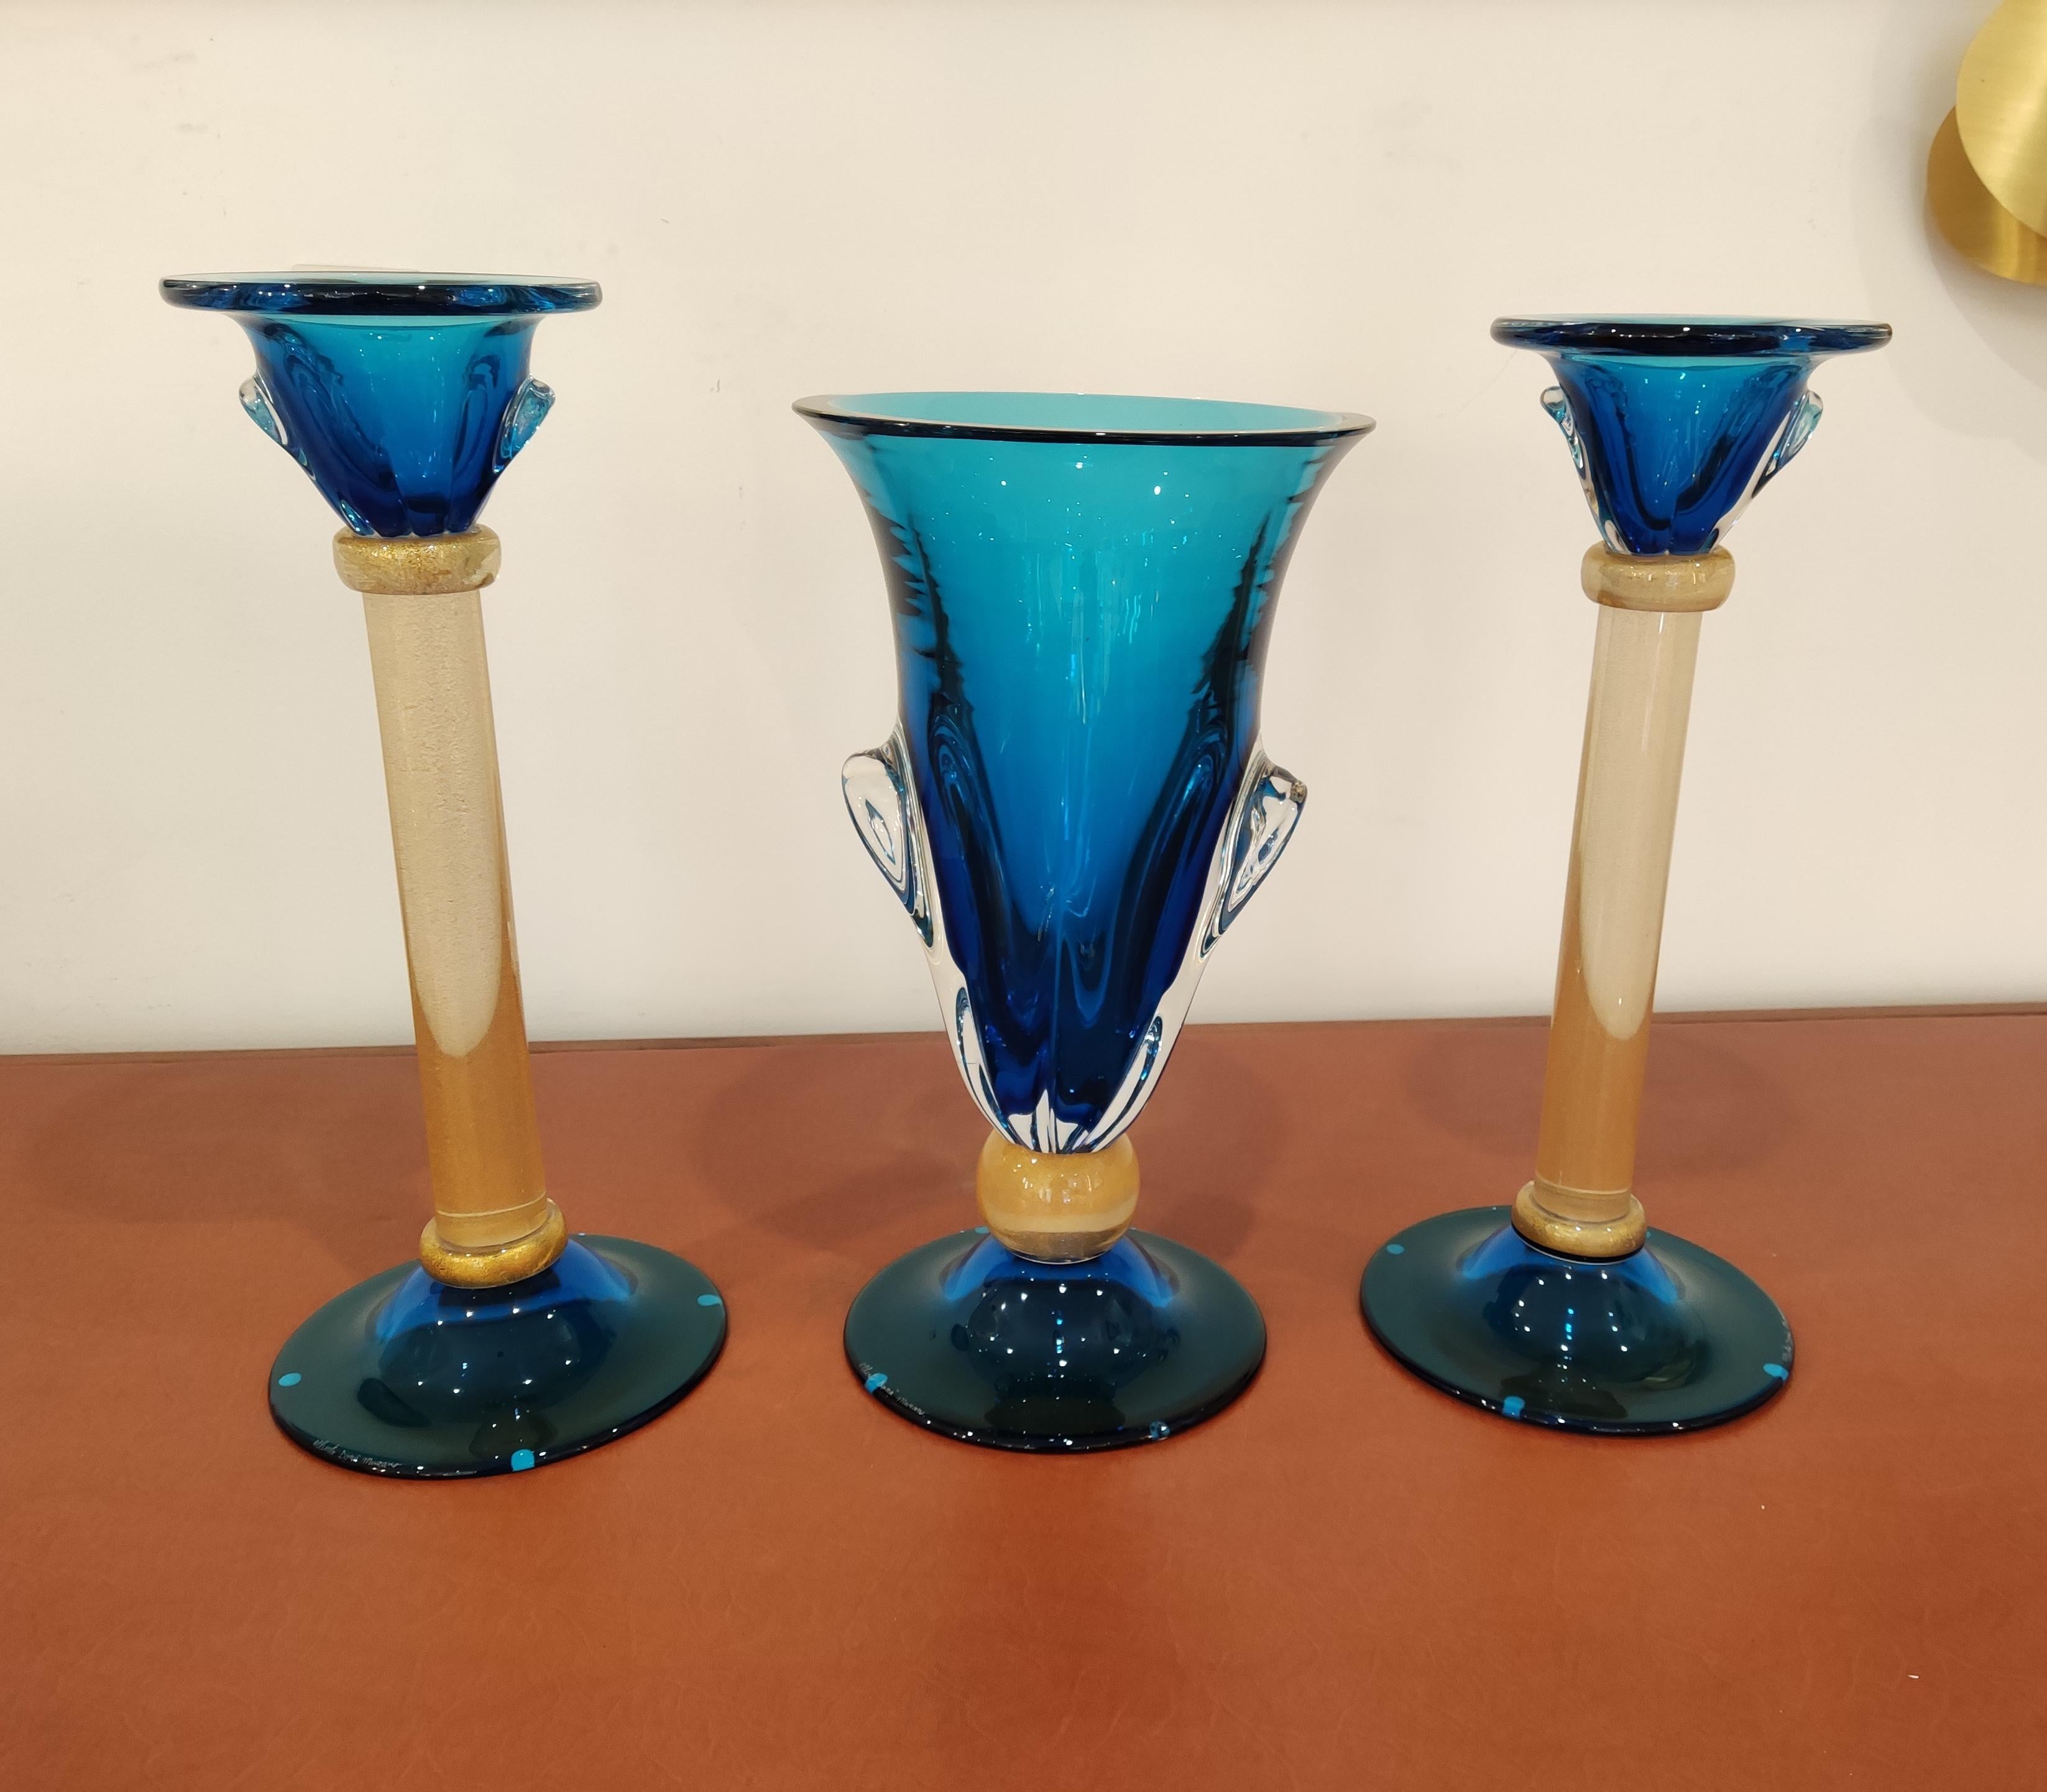 Alberto Donà set of 3 pièces (2 candlesticks and 1 vase), all signed.
Measures: Vase: H 45 x 25cm
Candlesticks: H 49 x 21cm.
  